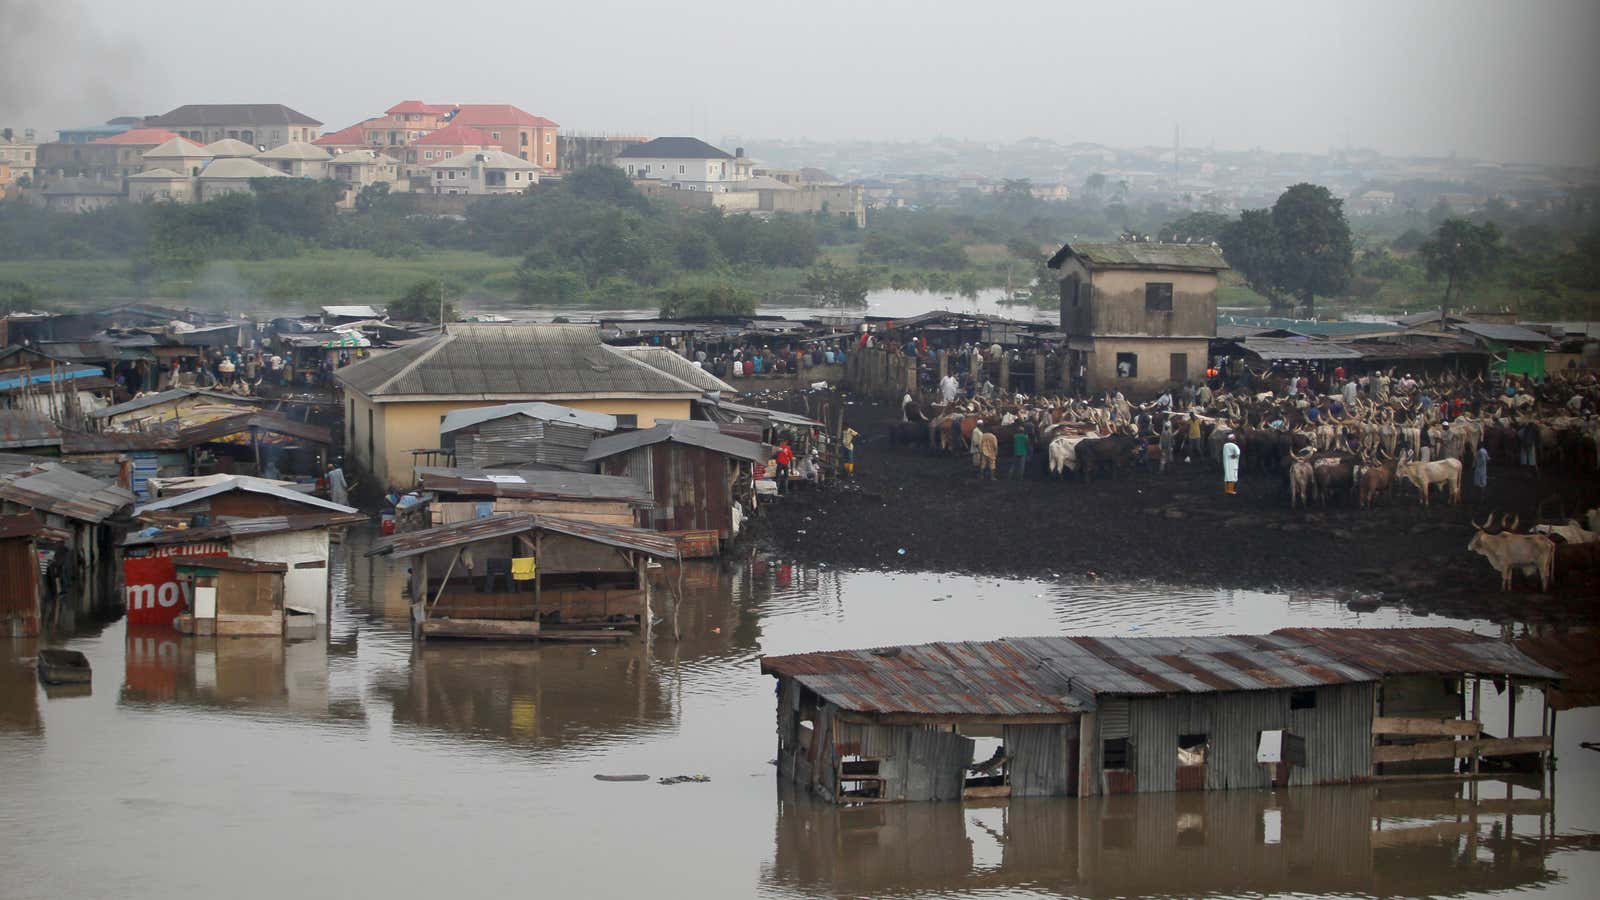 The Ogun river flooding the banks near a livestock market in Lagos, Nigeria.